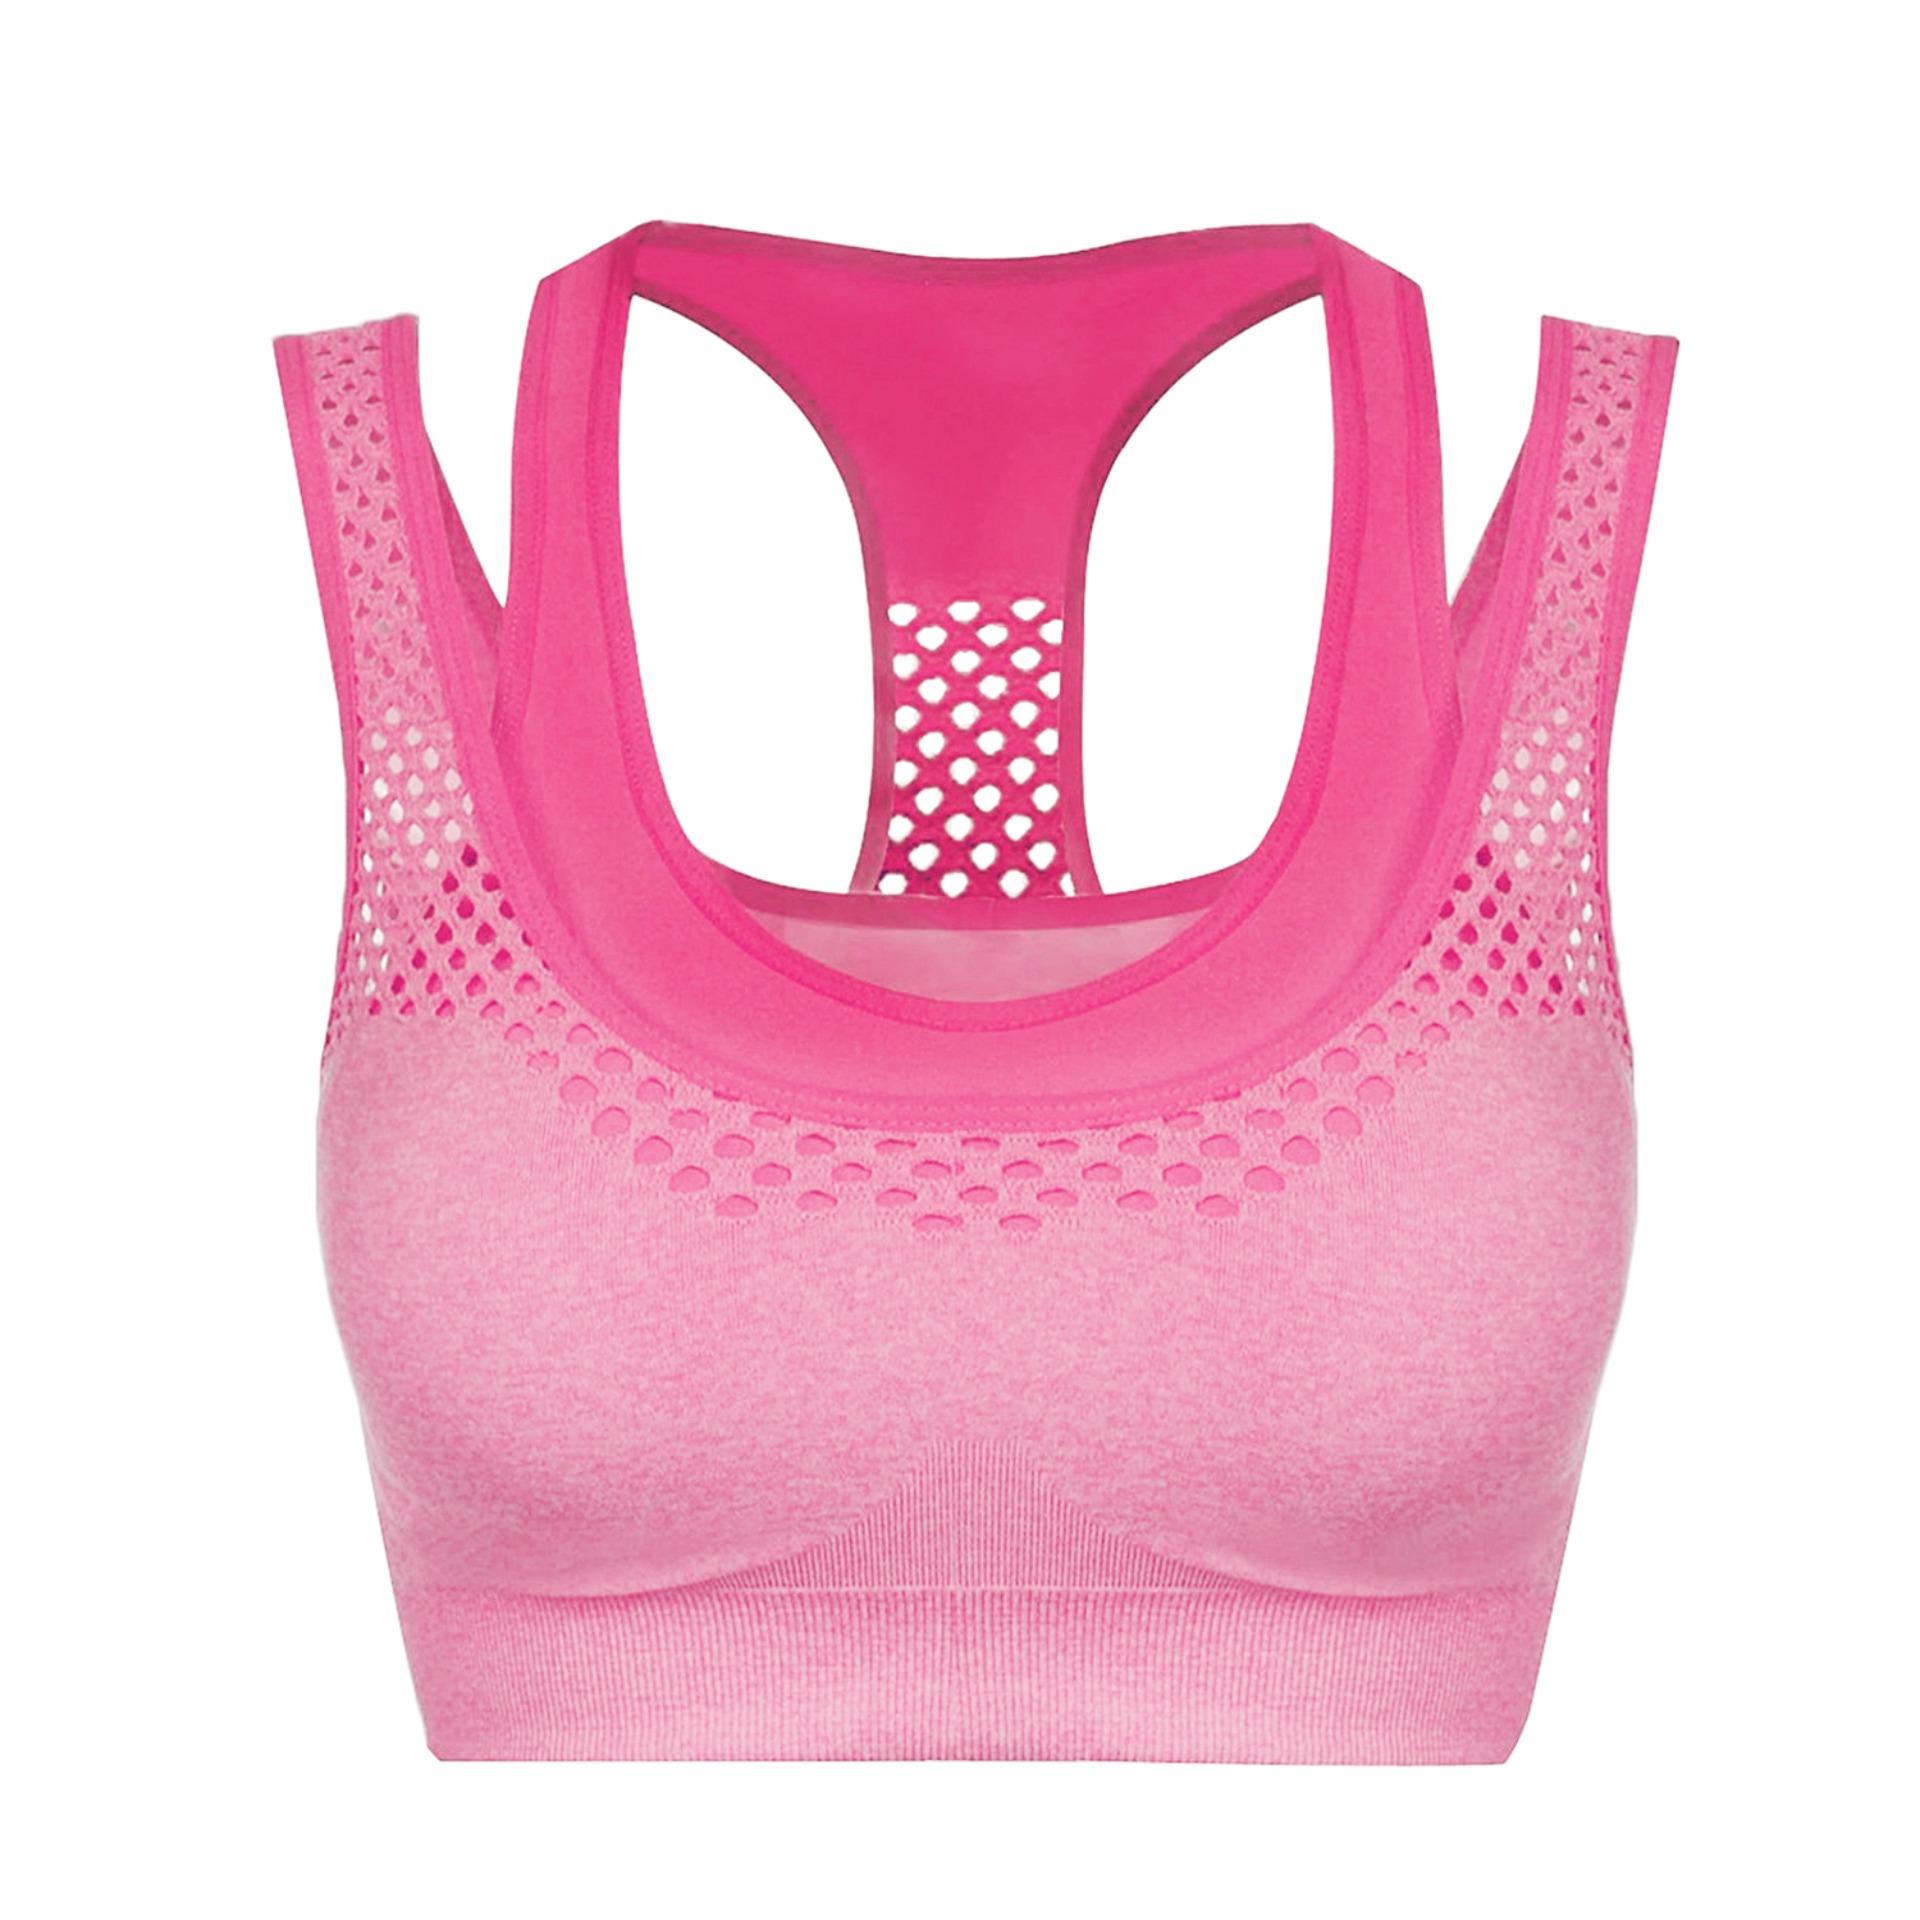 Isassy sports bra สปอตบรา สำหรับ ออกกำลังกาย -สีชมพู-